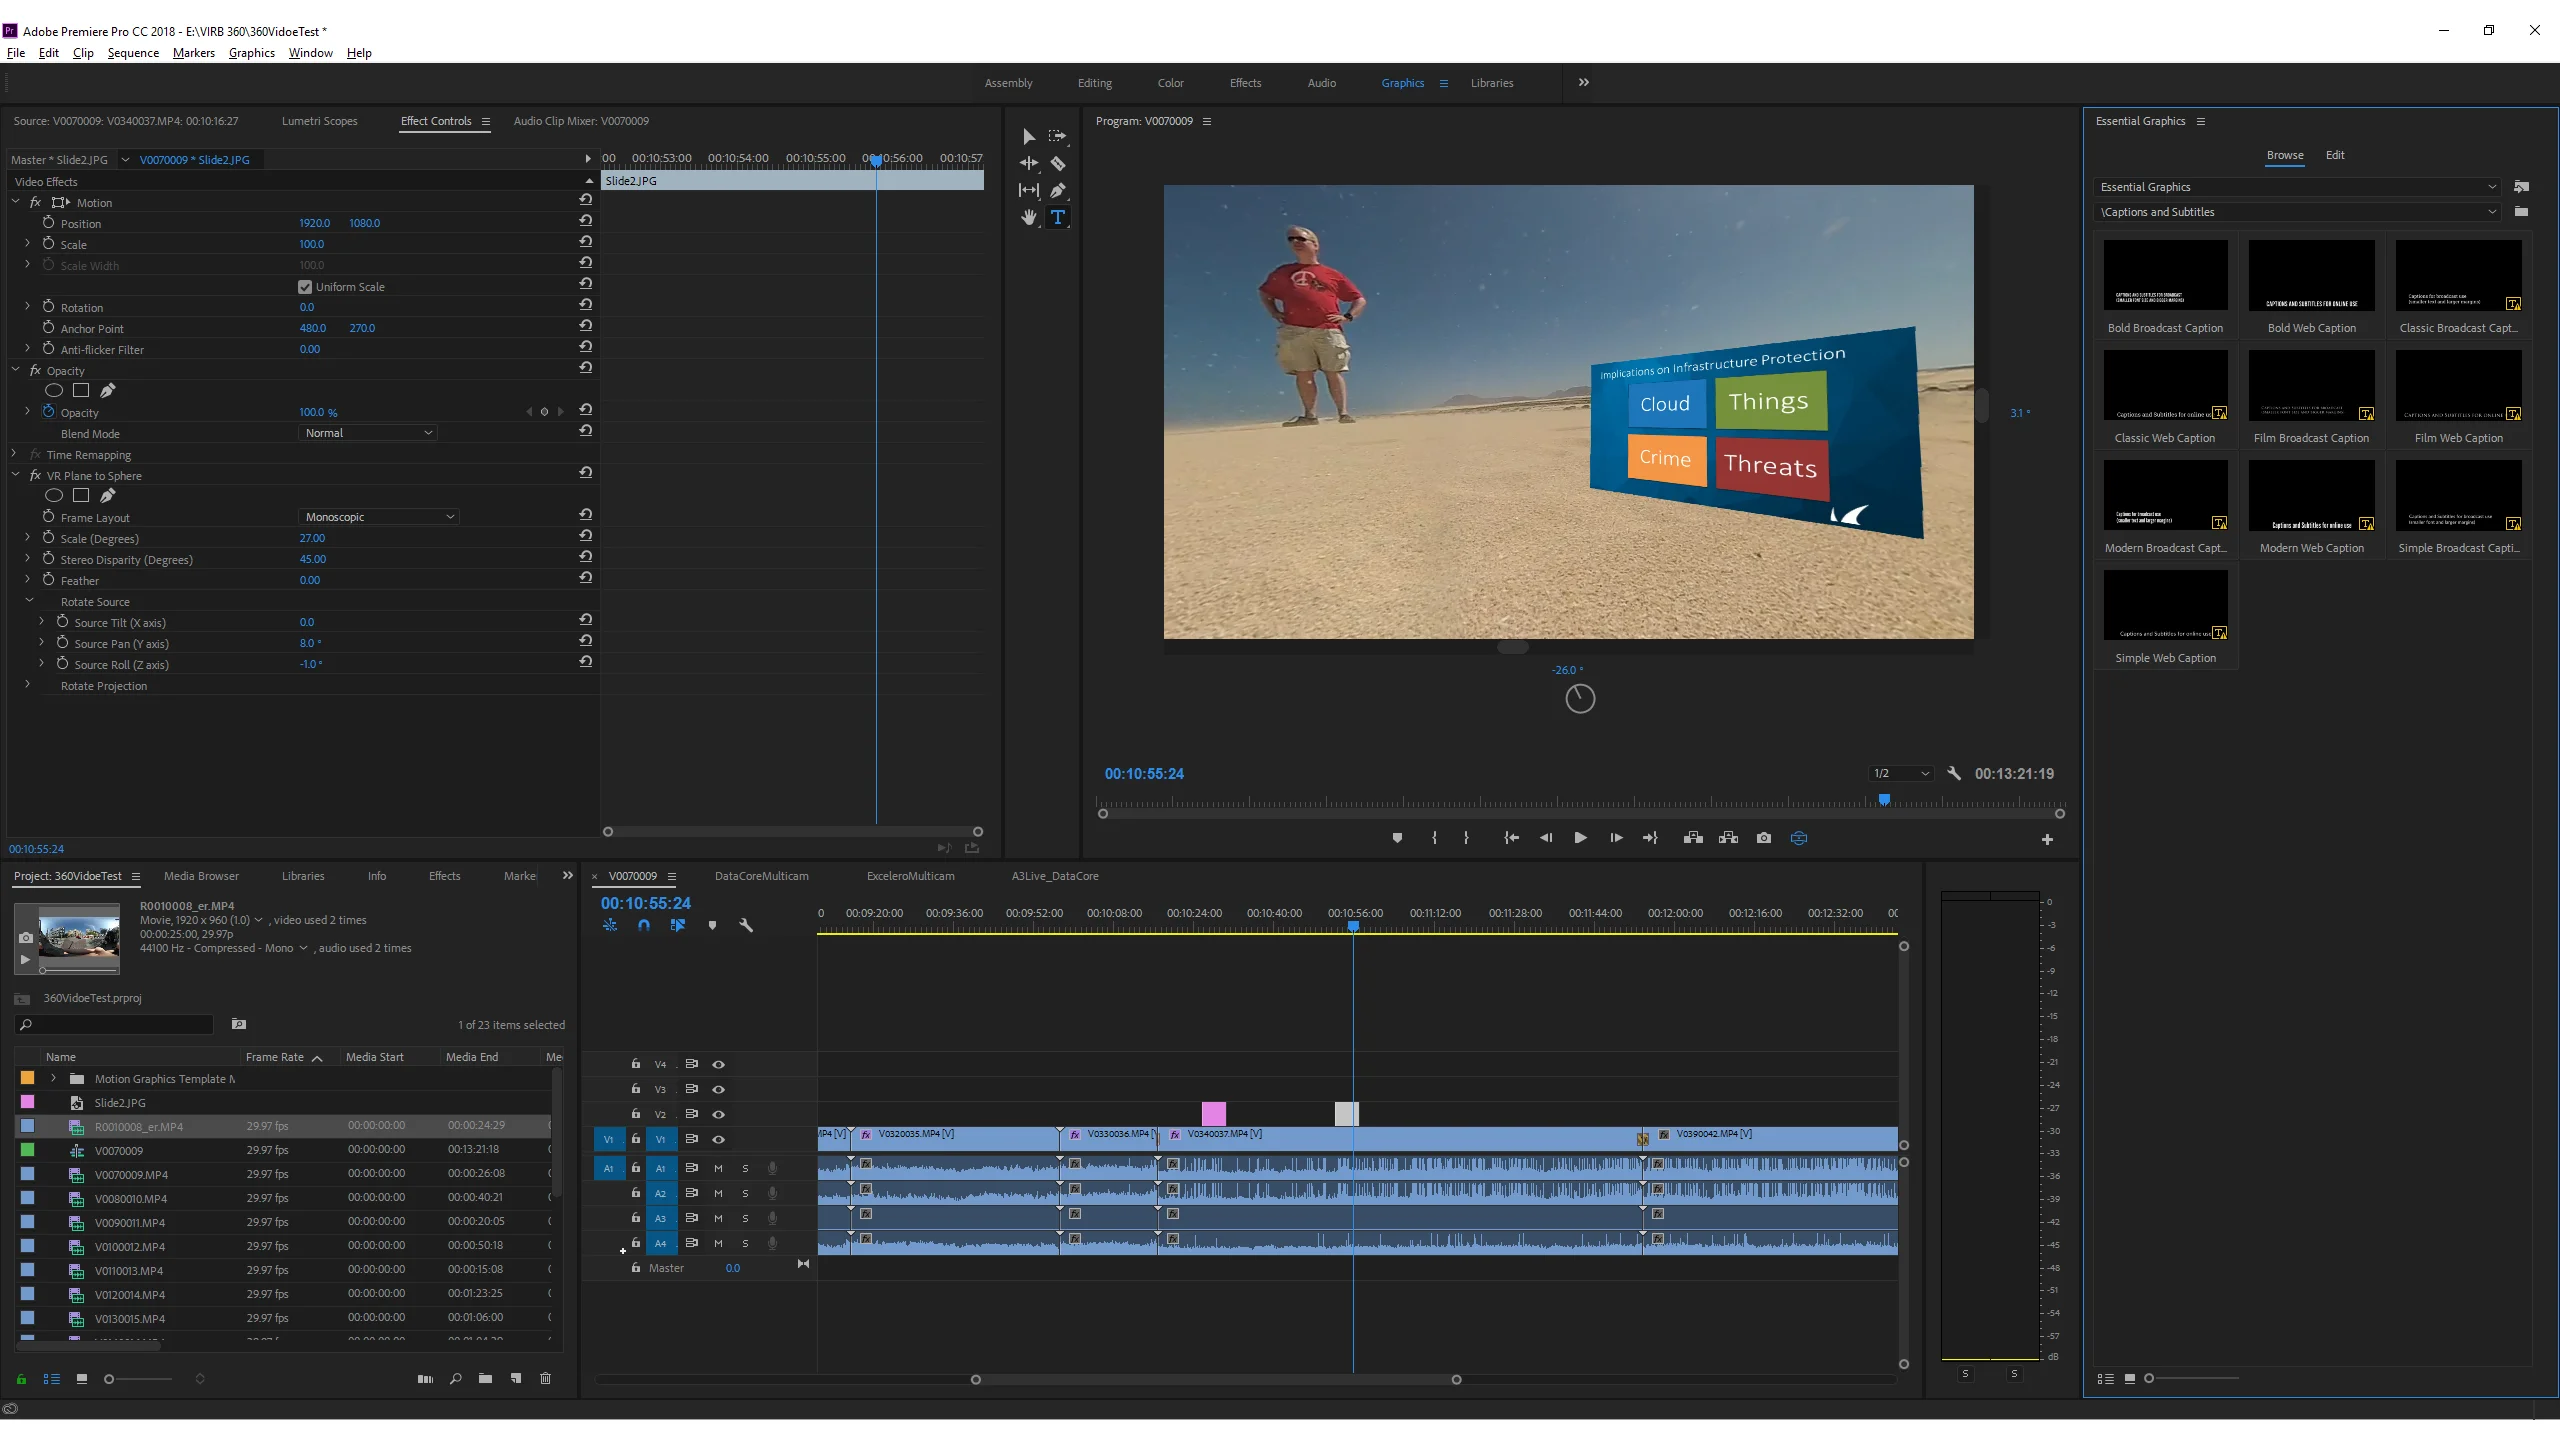 Adobe Premiere Pro CC Crack 2022 + Keygen Terbaru